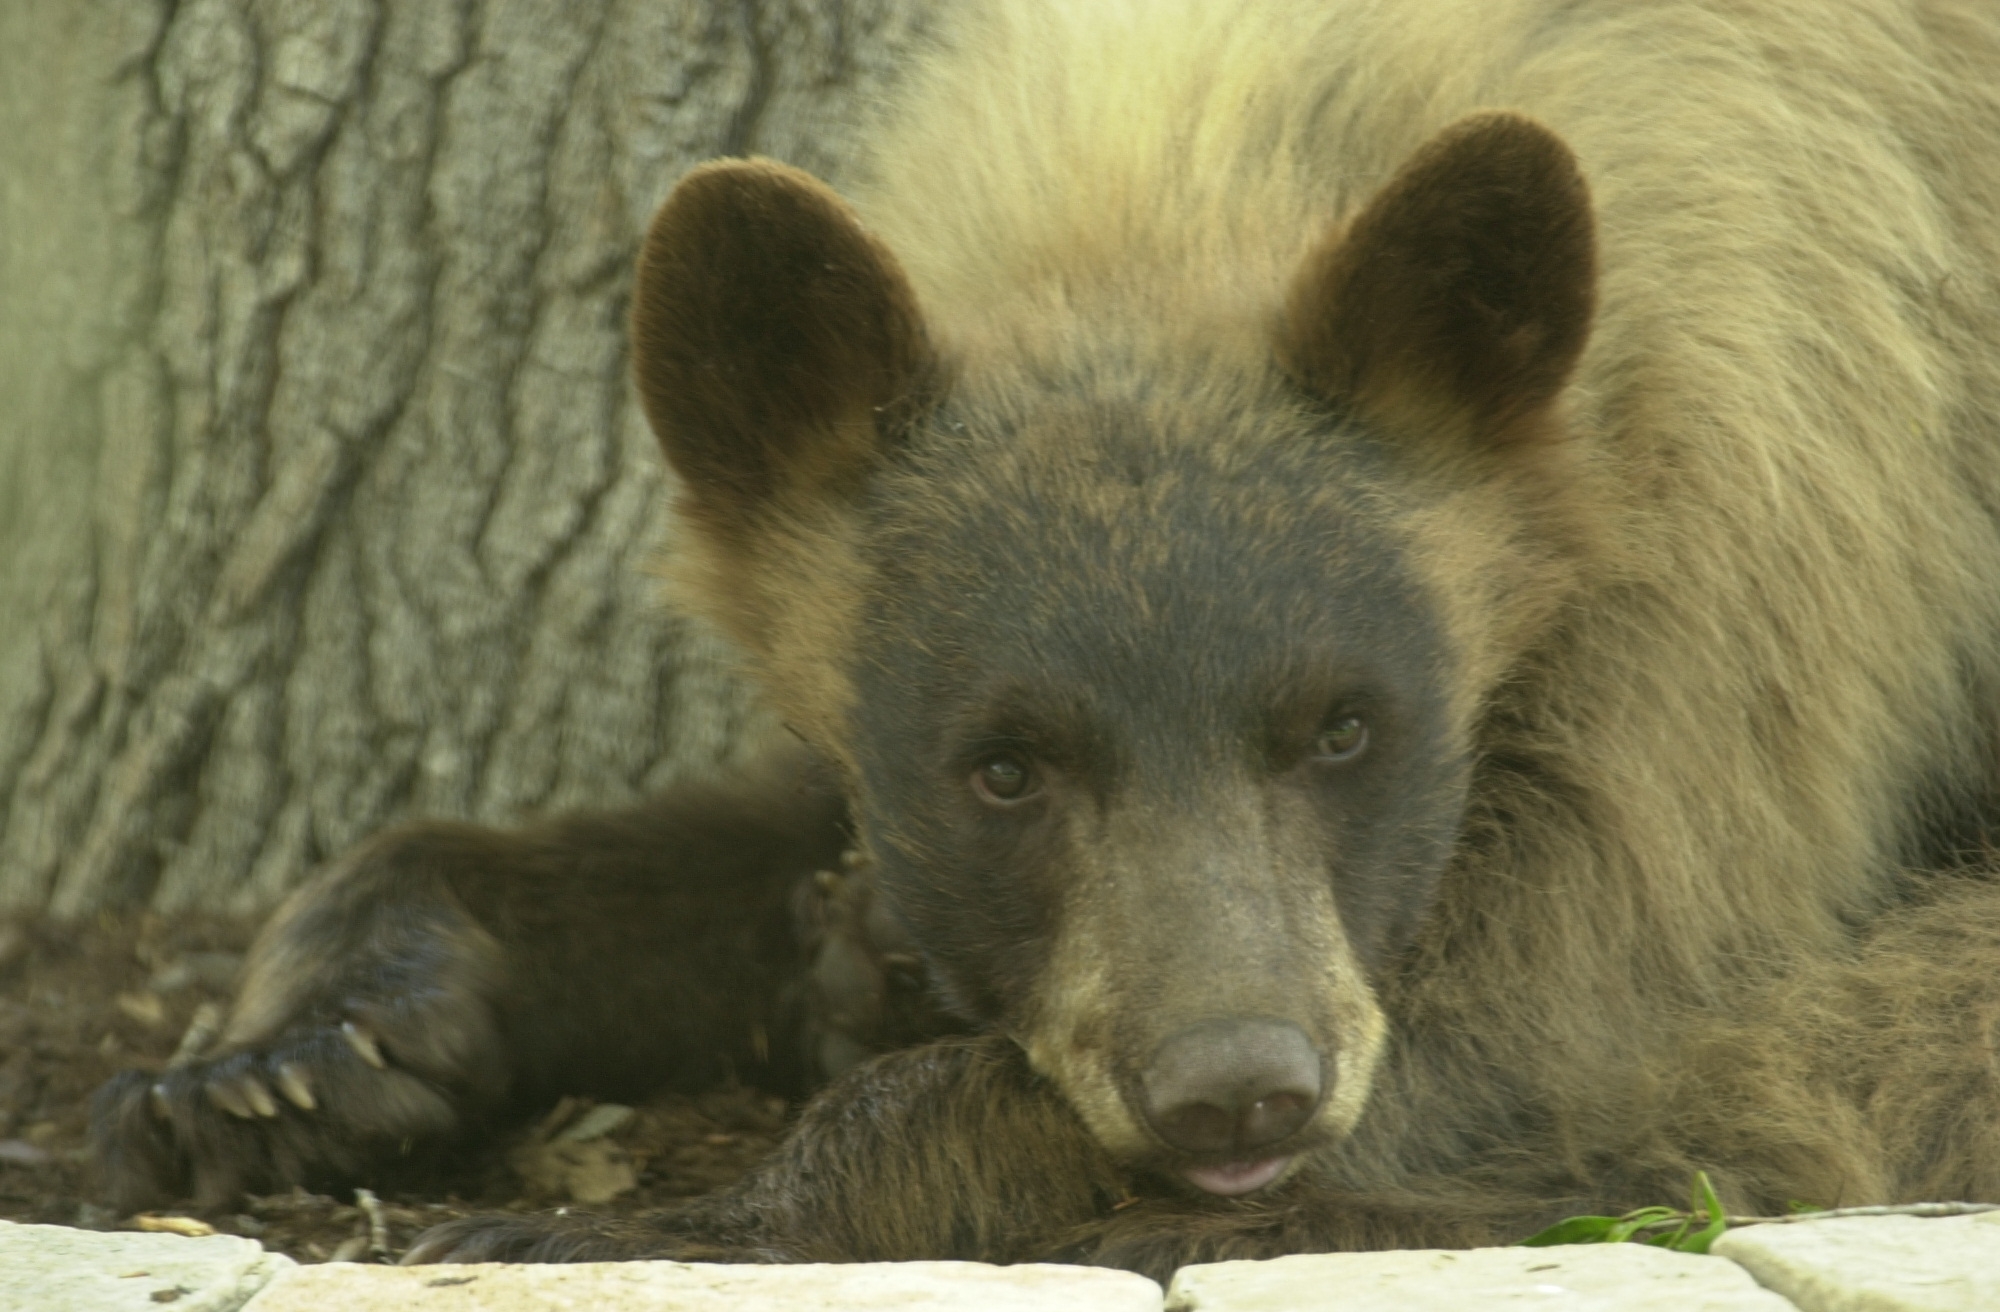 Photo: Colorado black bear